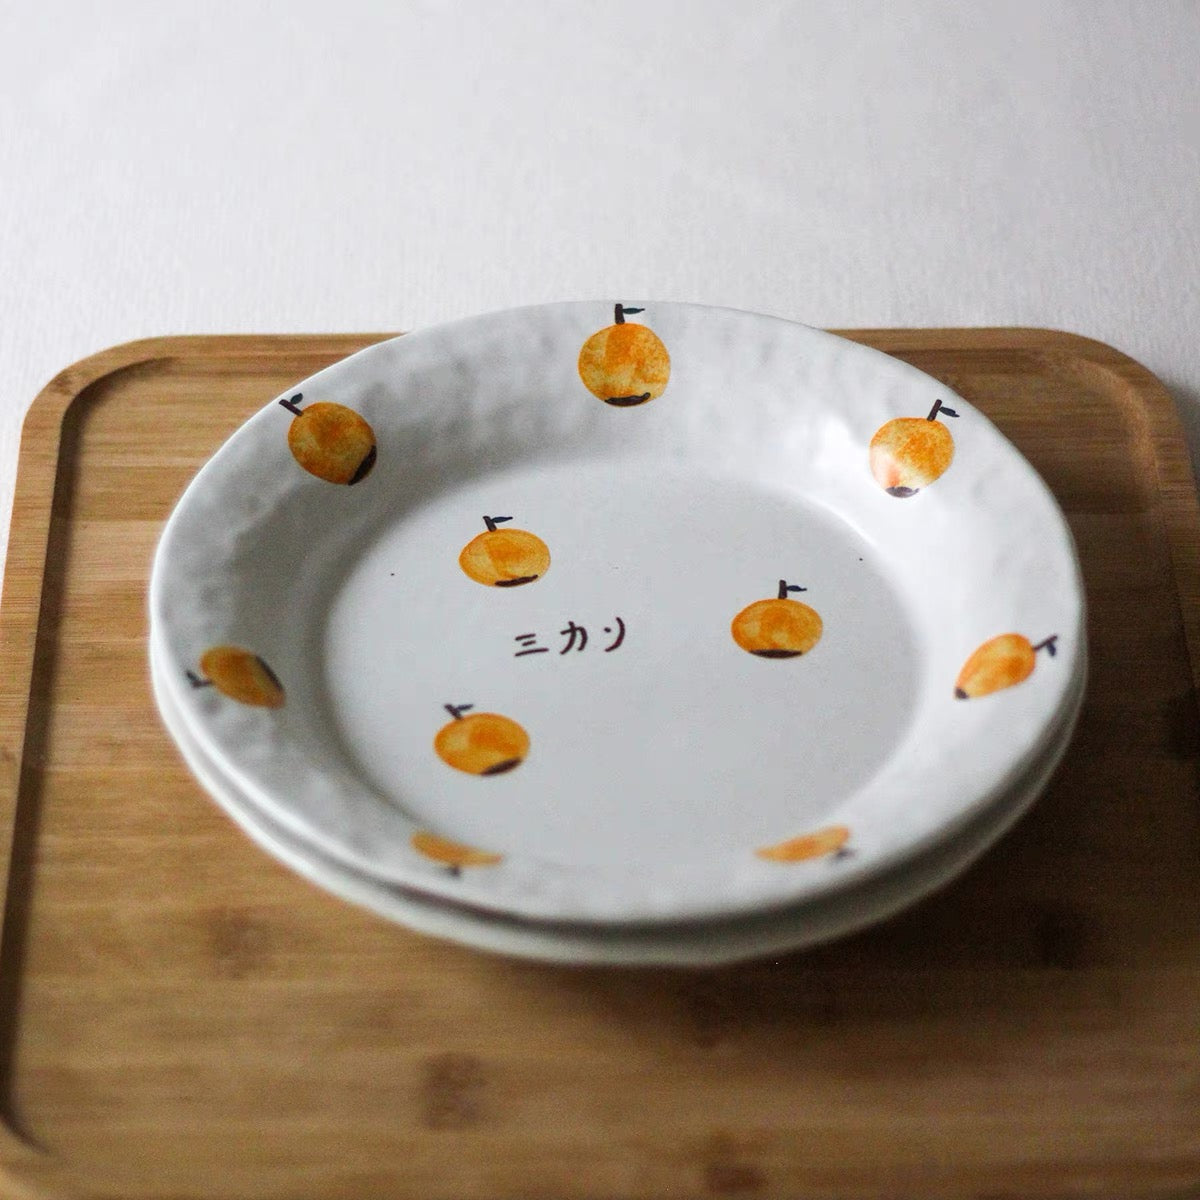 Handmade ceramics FTUIT plate